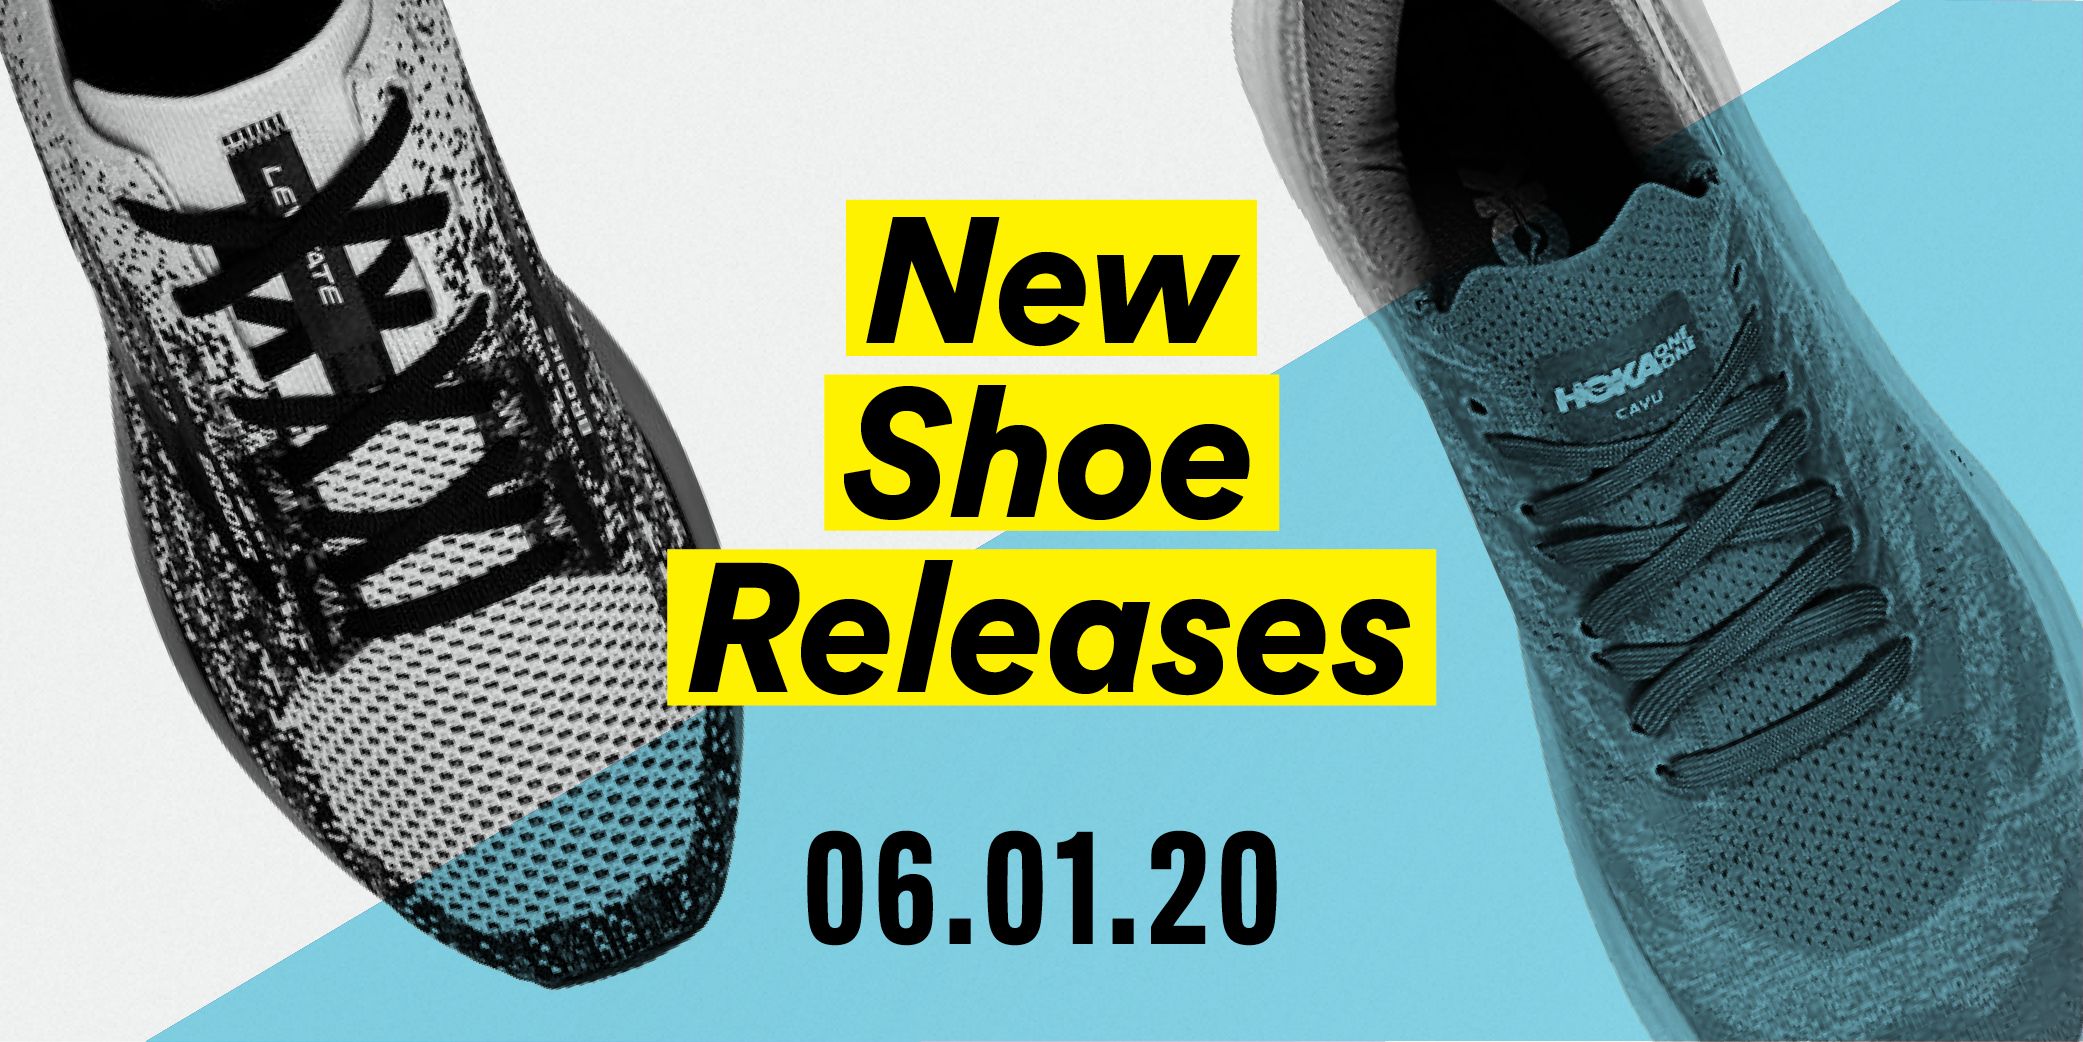 shoe release dates